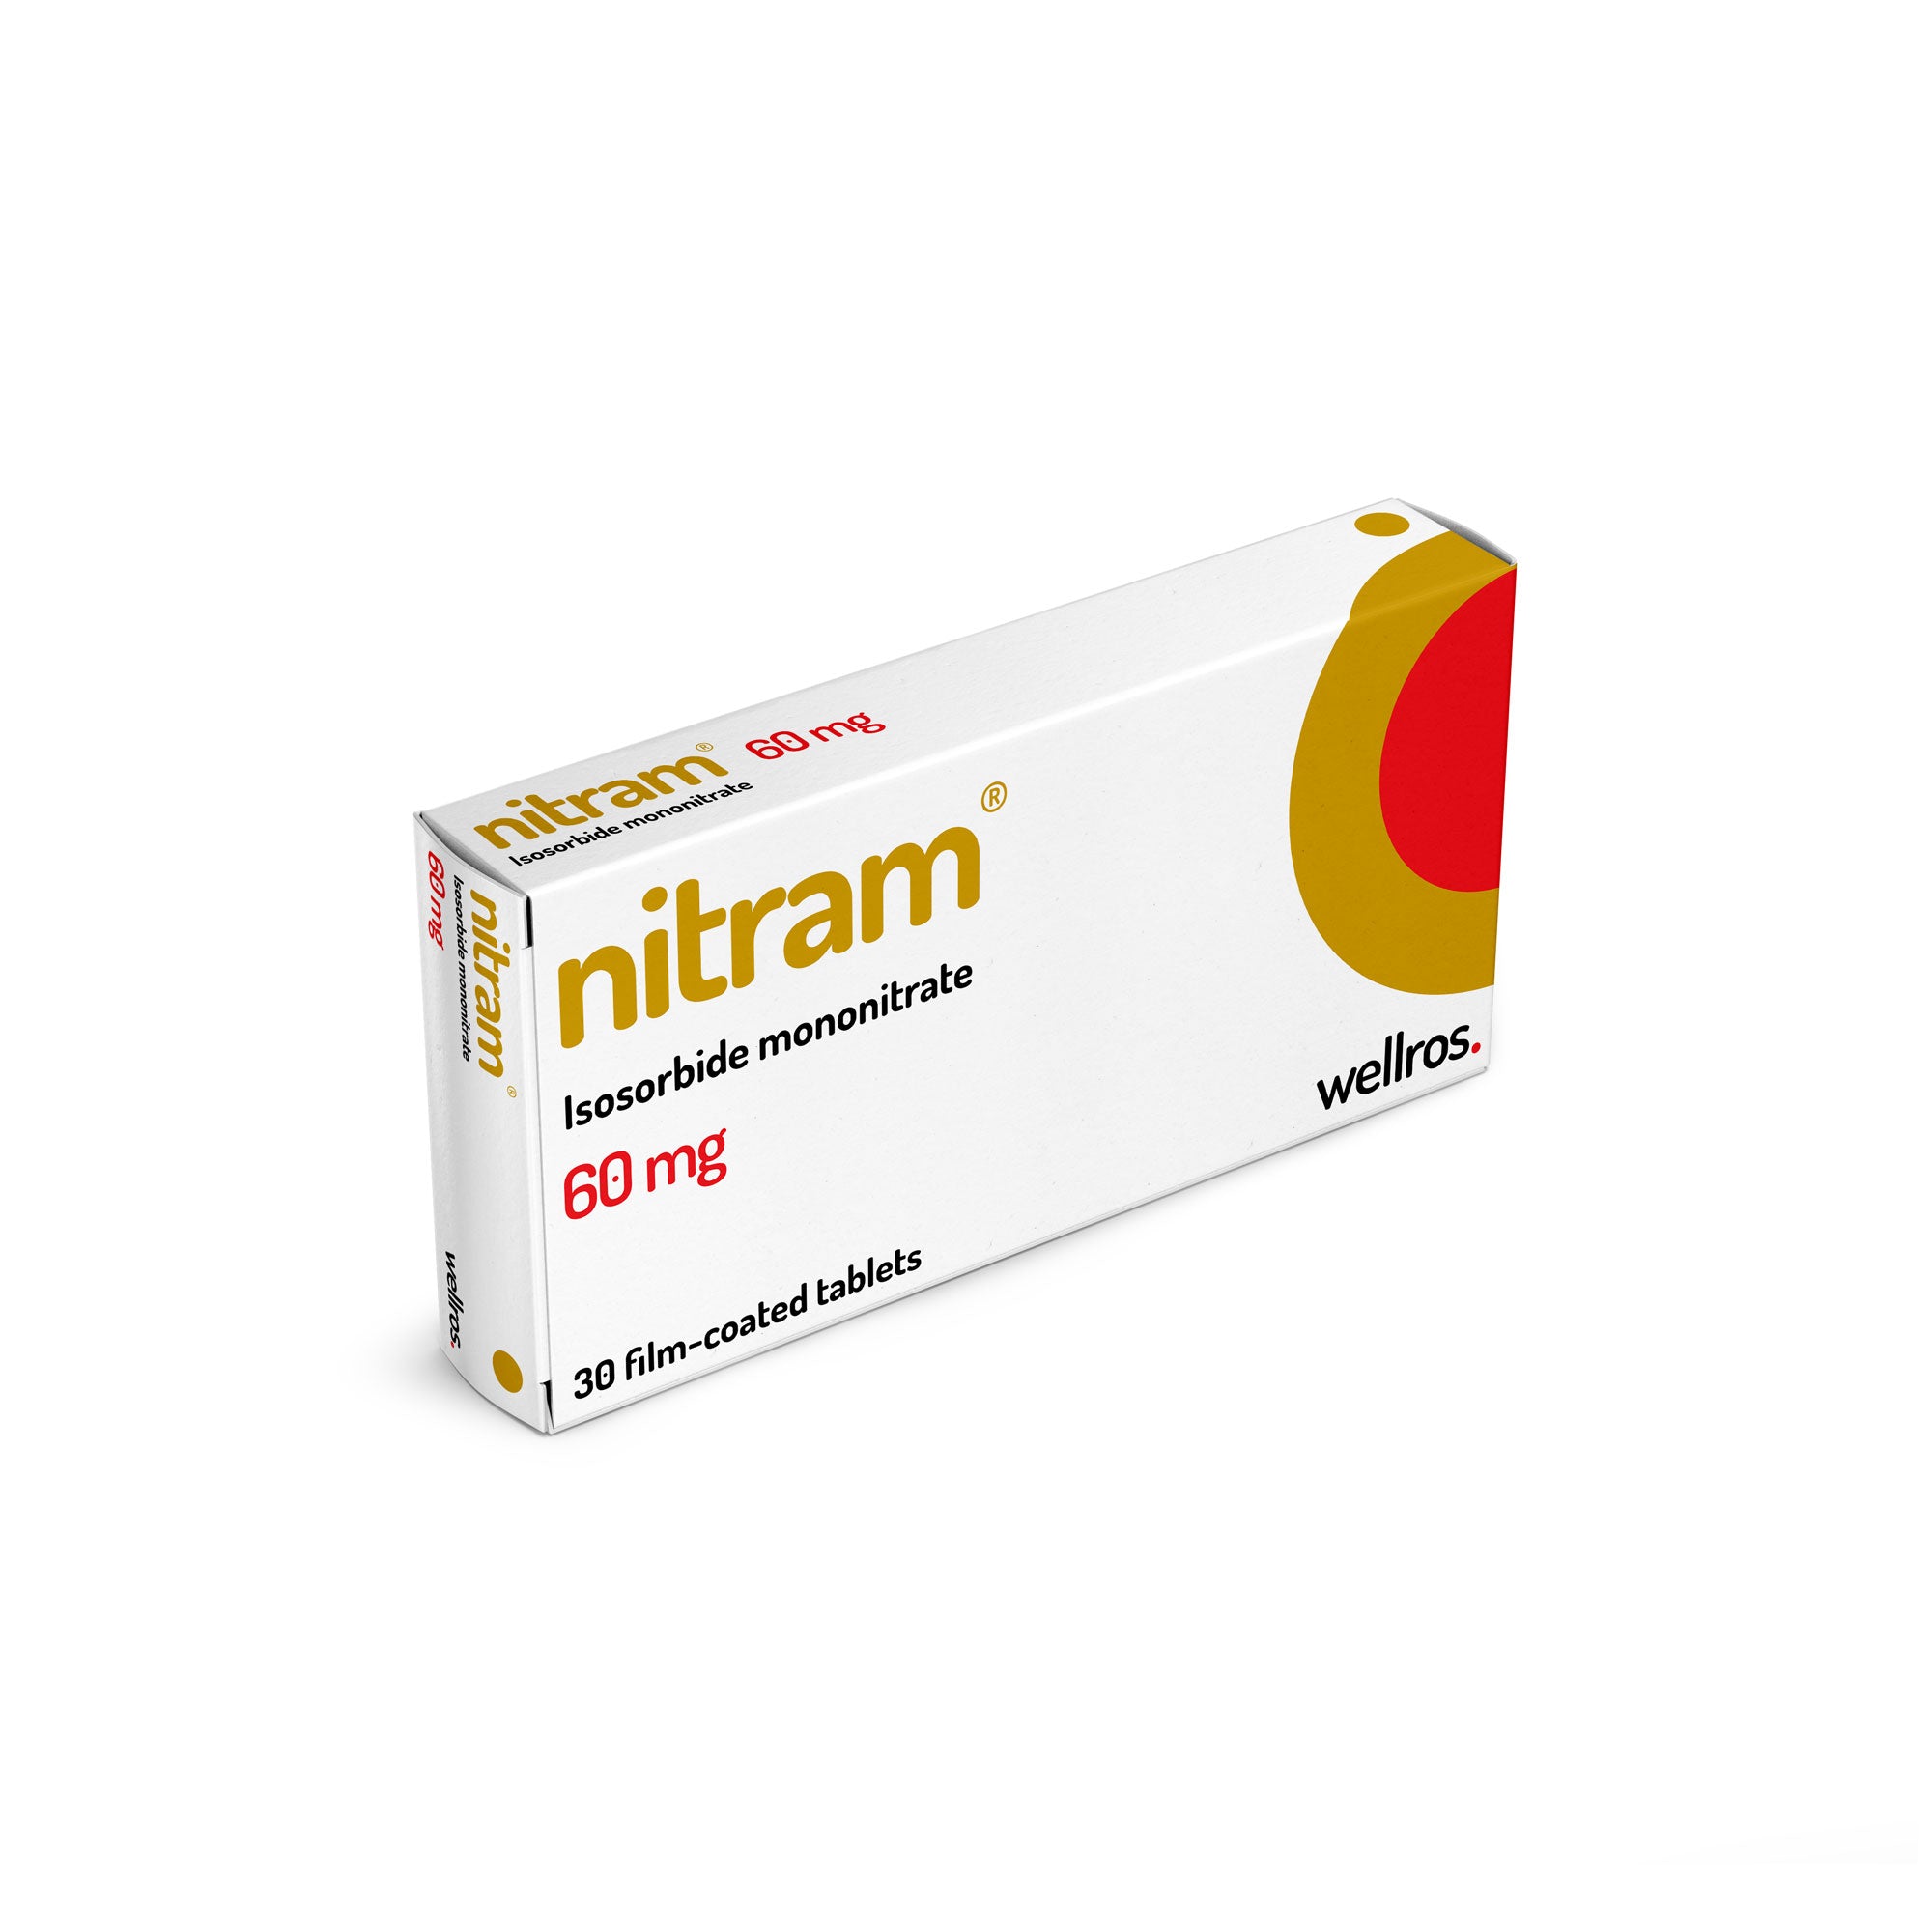 nitram 60 mg - wellros